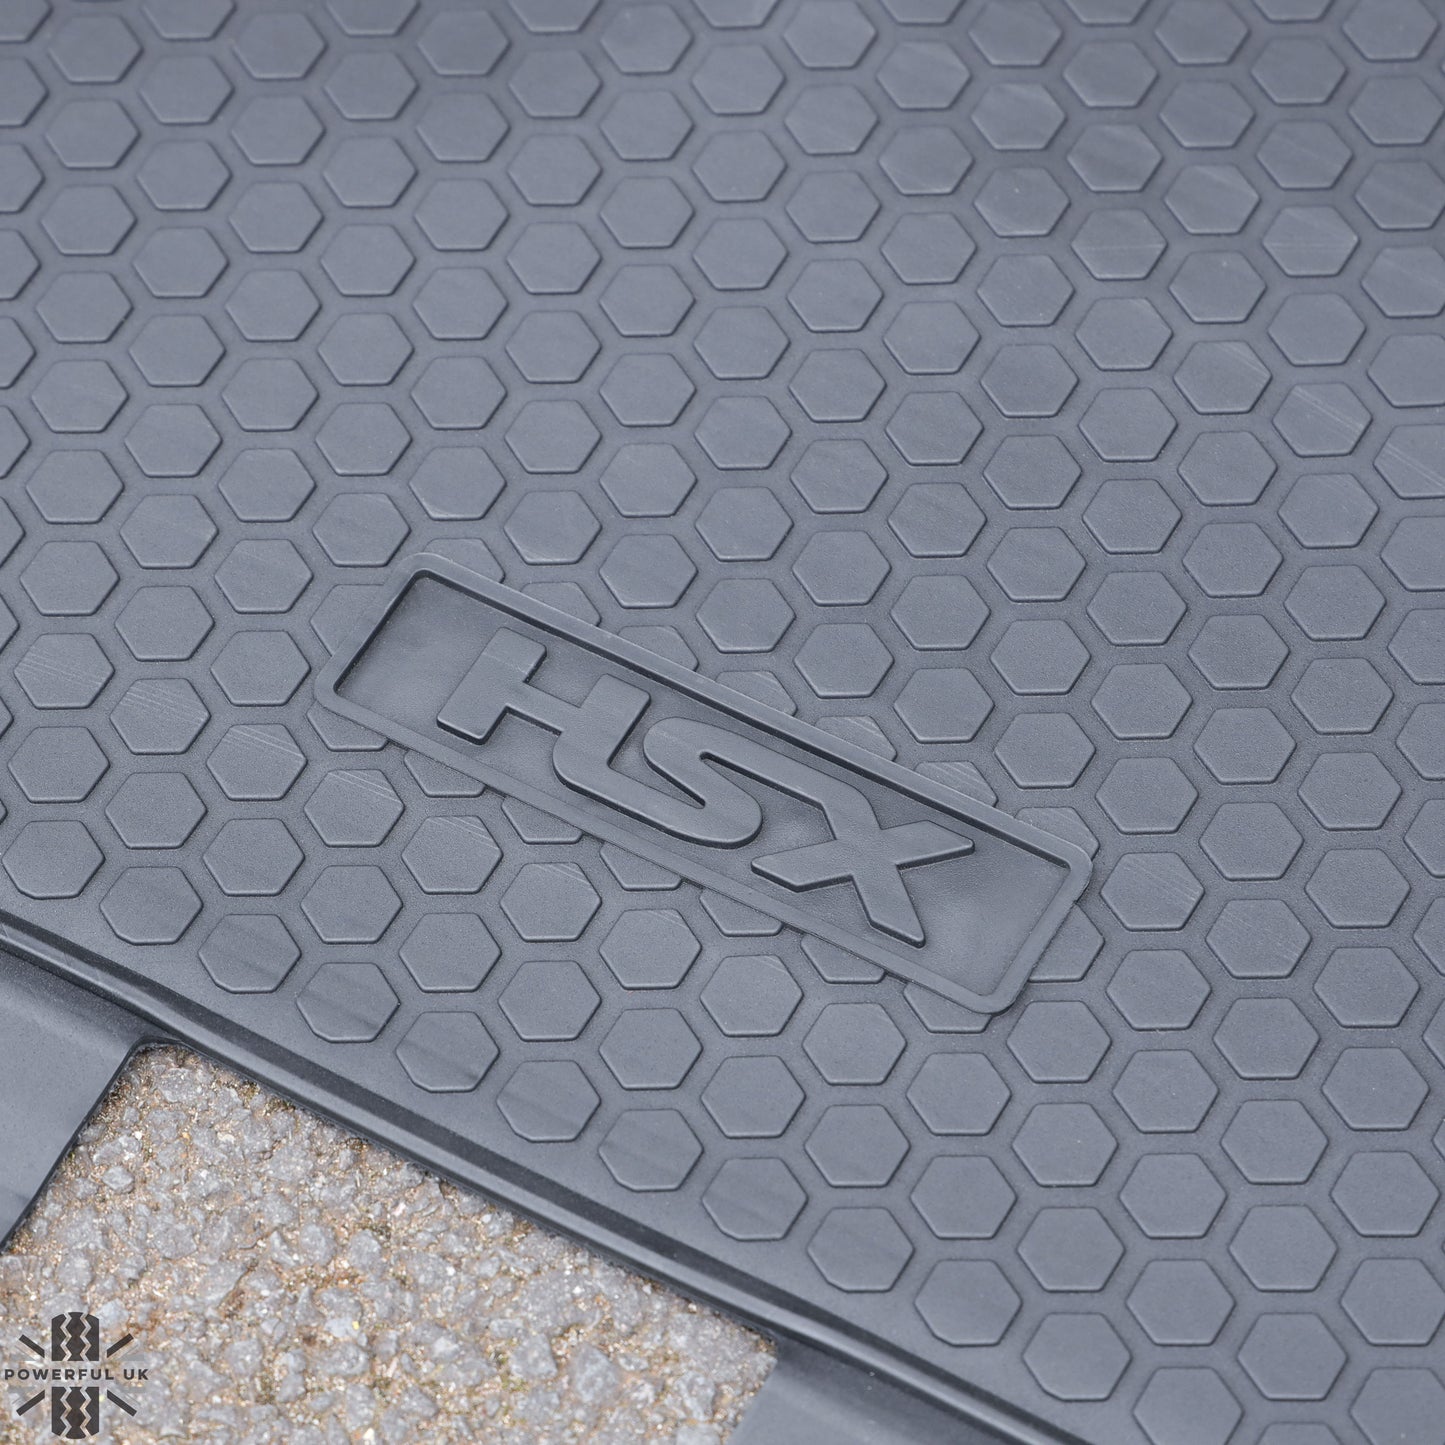 HSX Rubber Boot Liner Mat for Range Rover Sport L320